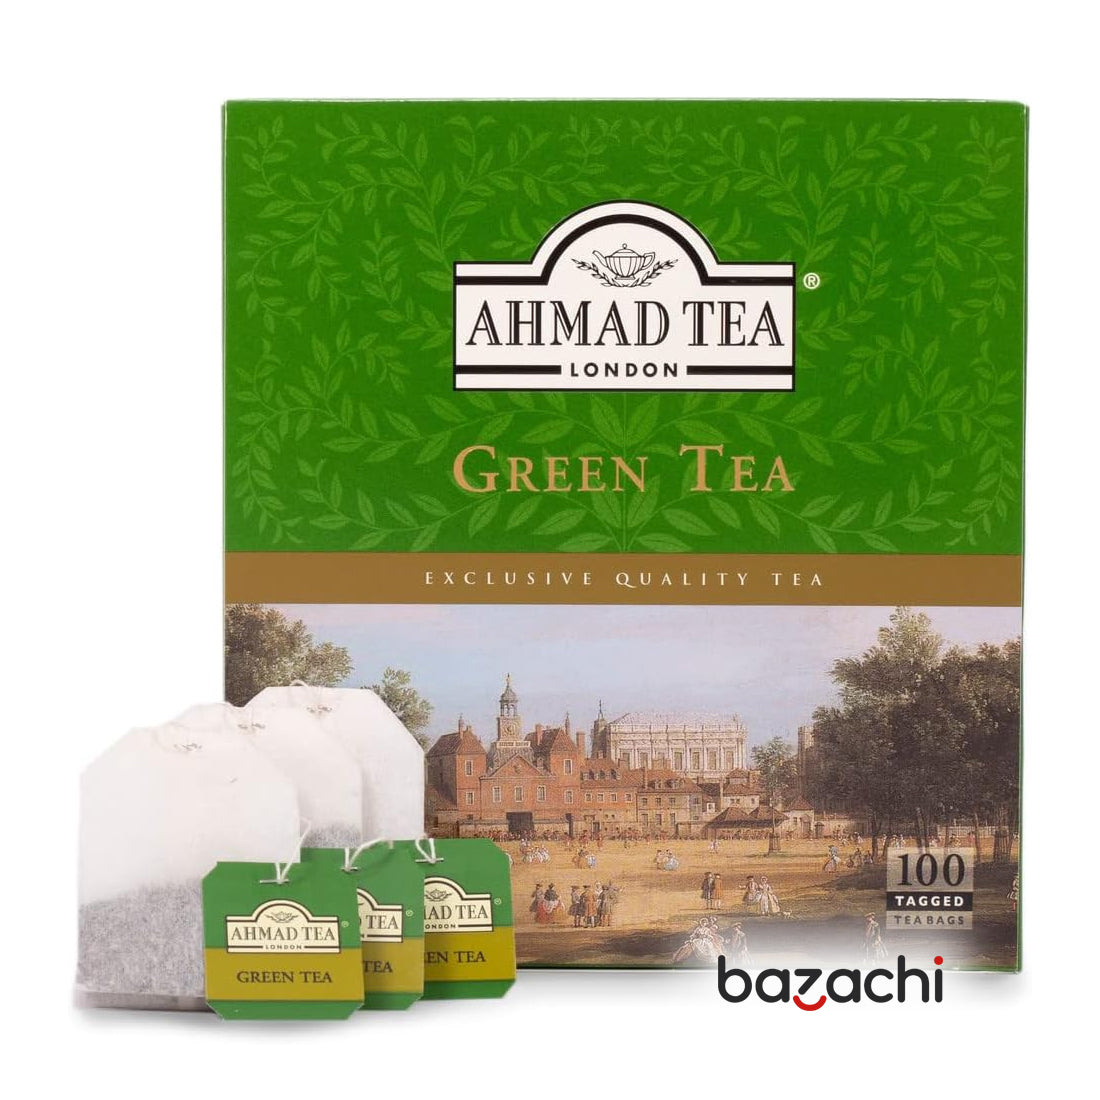 Ahmad Tea Bags Green Tea 100 bags